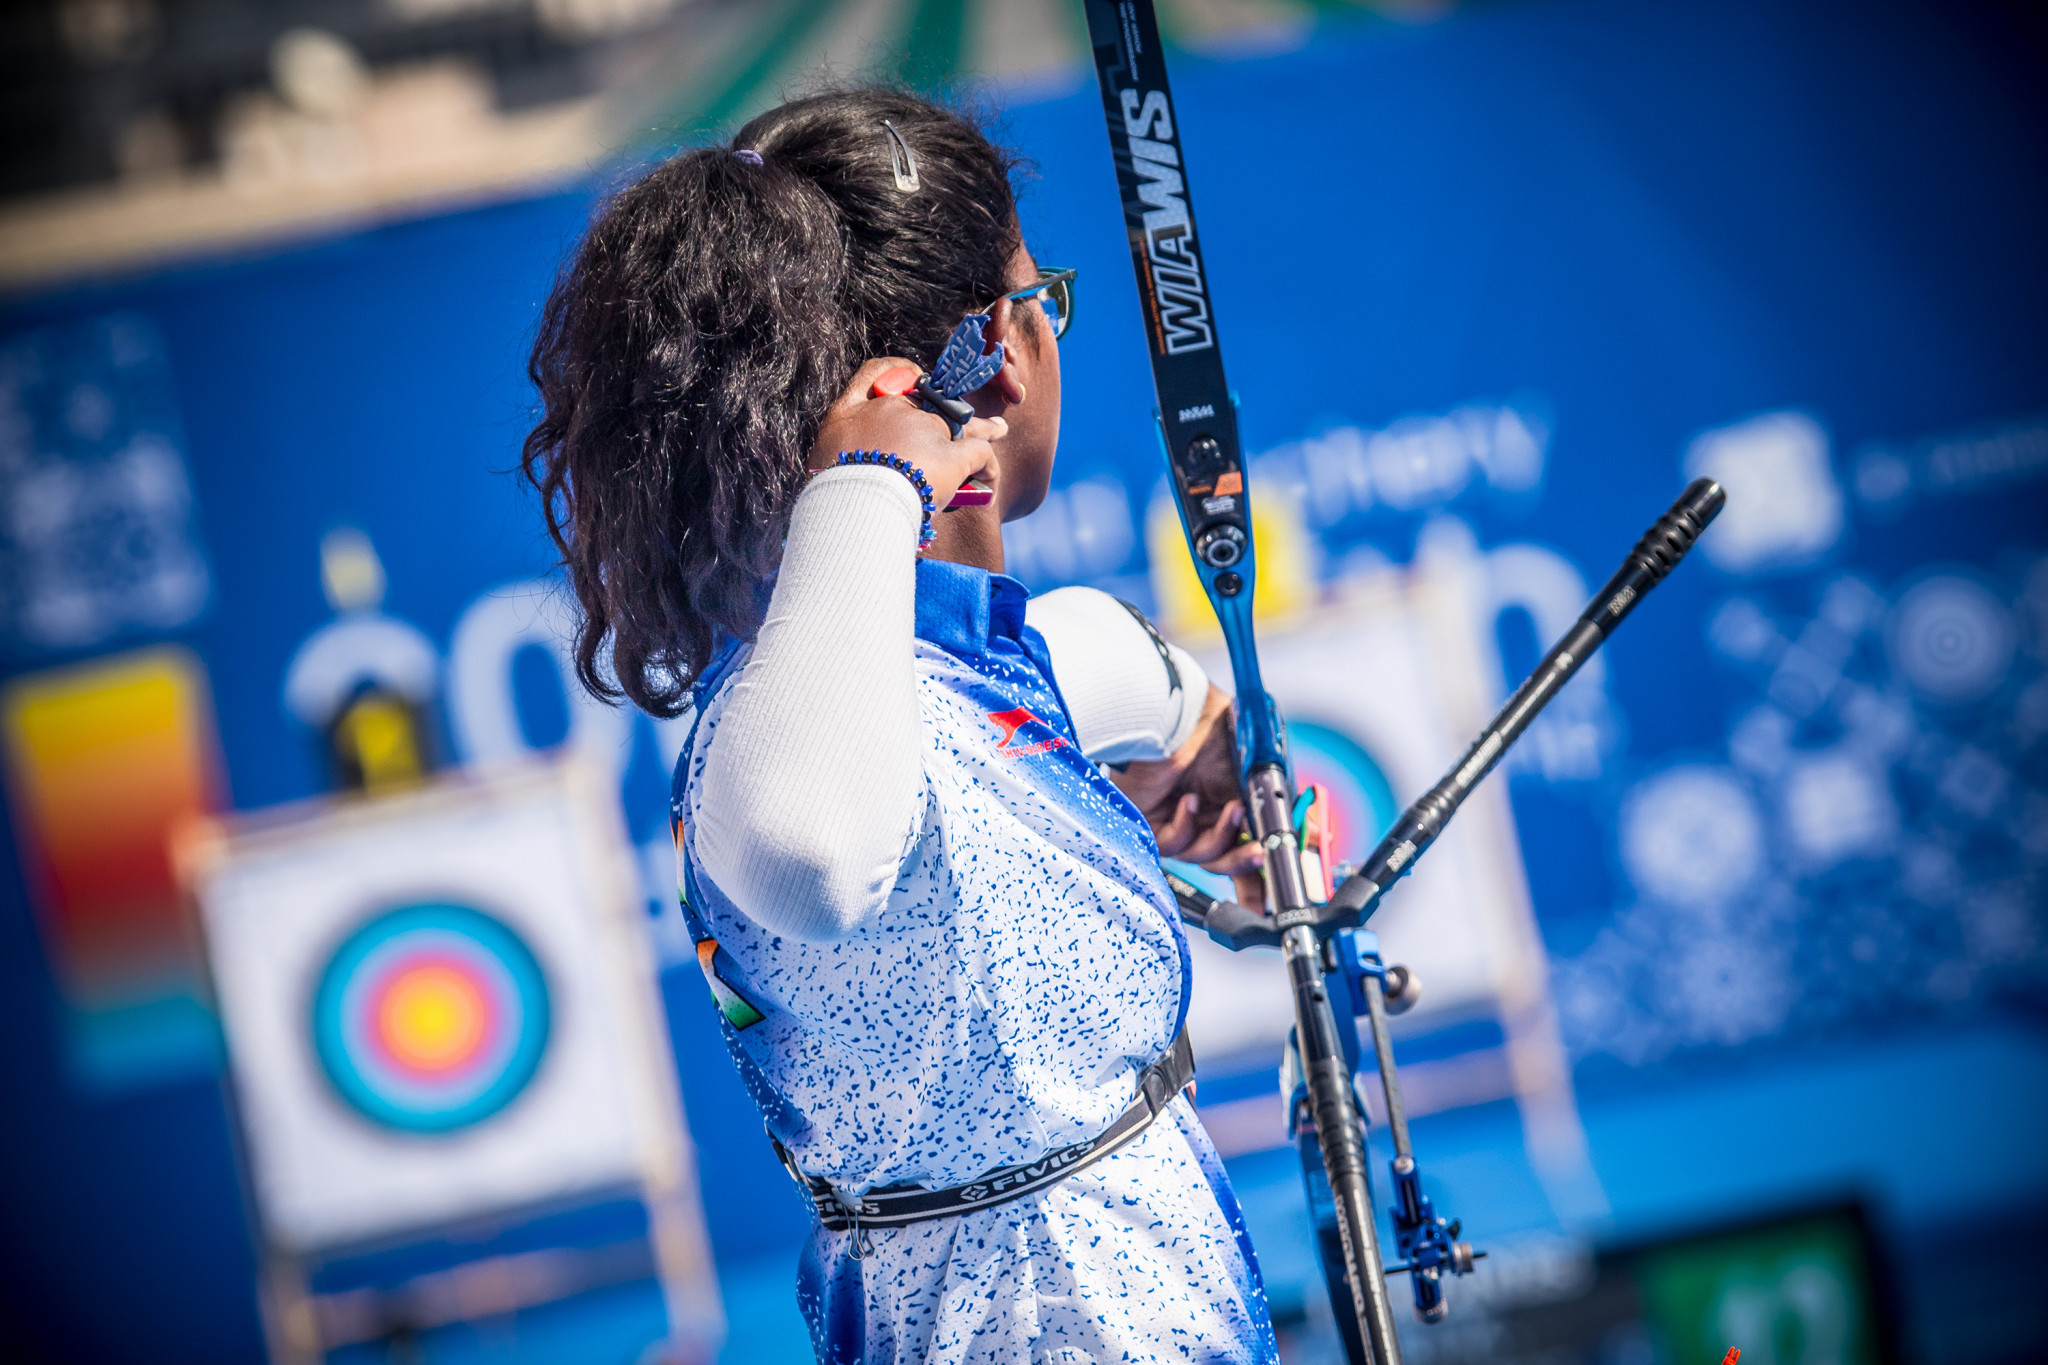 World Archery Youth Championships set to get underway in Wrocław